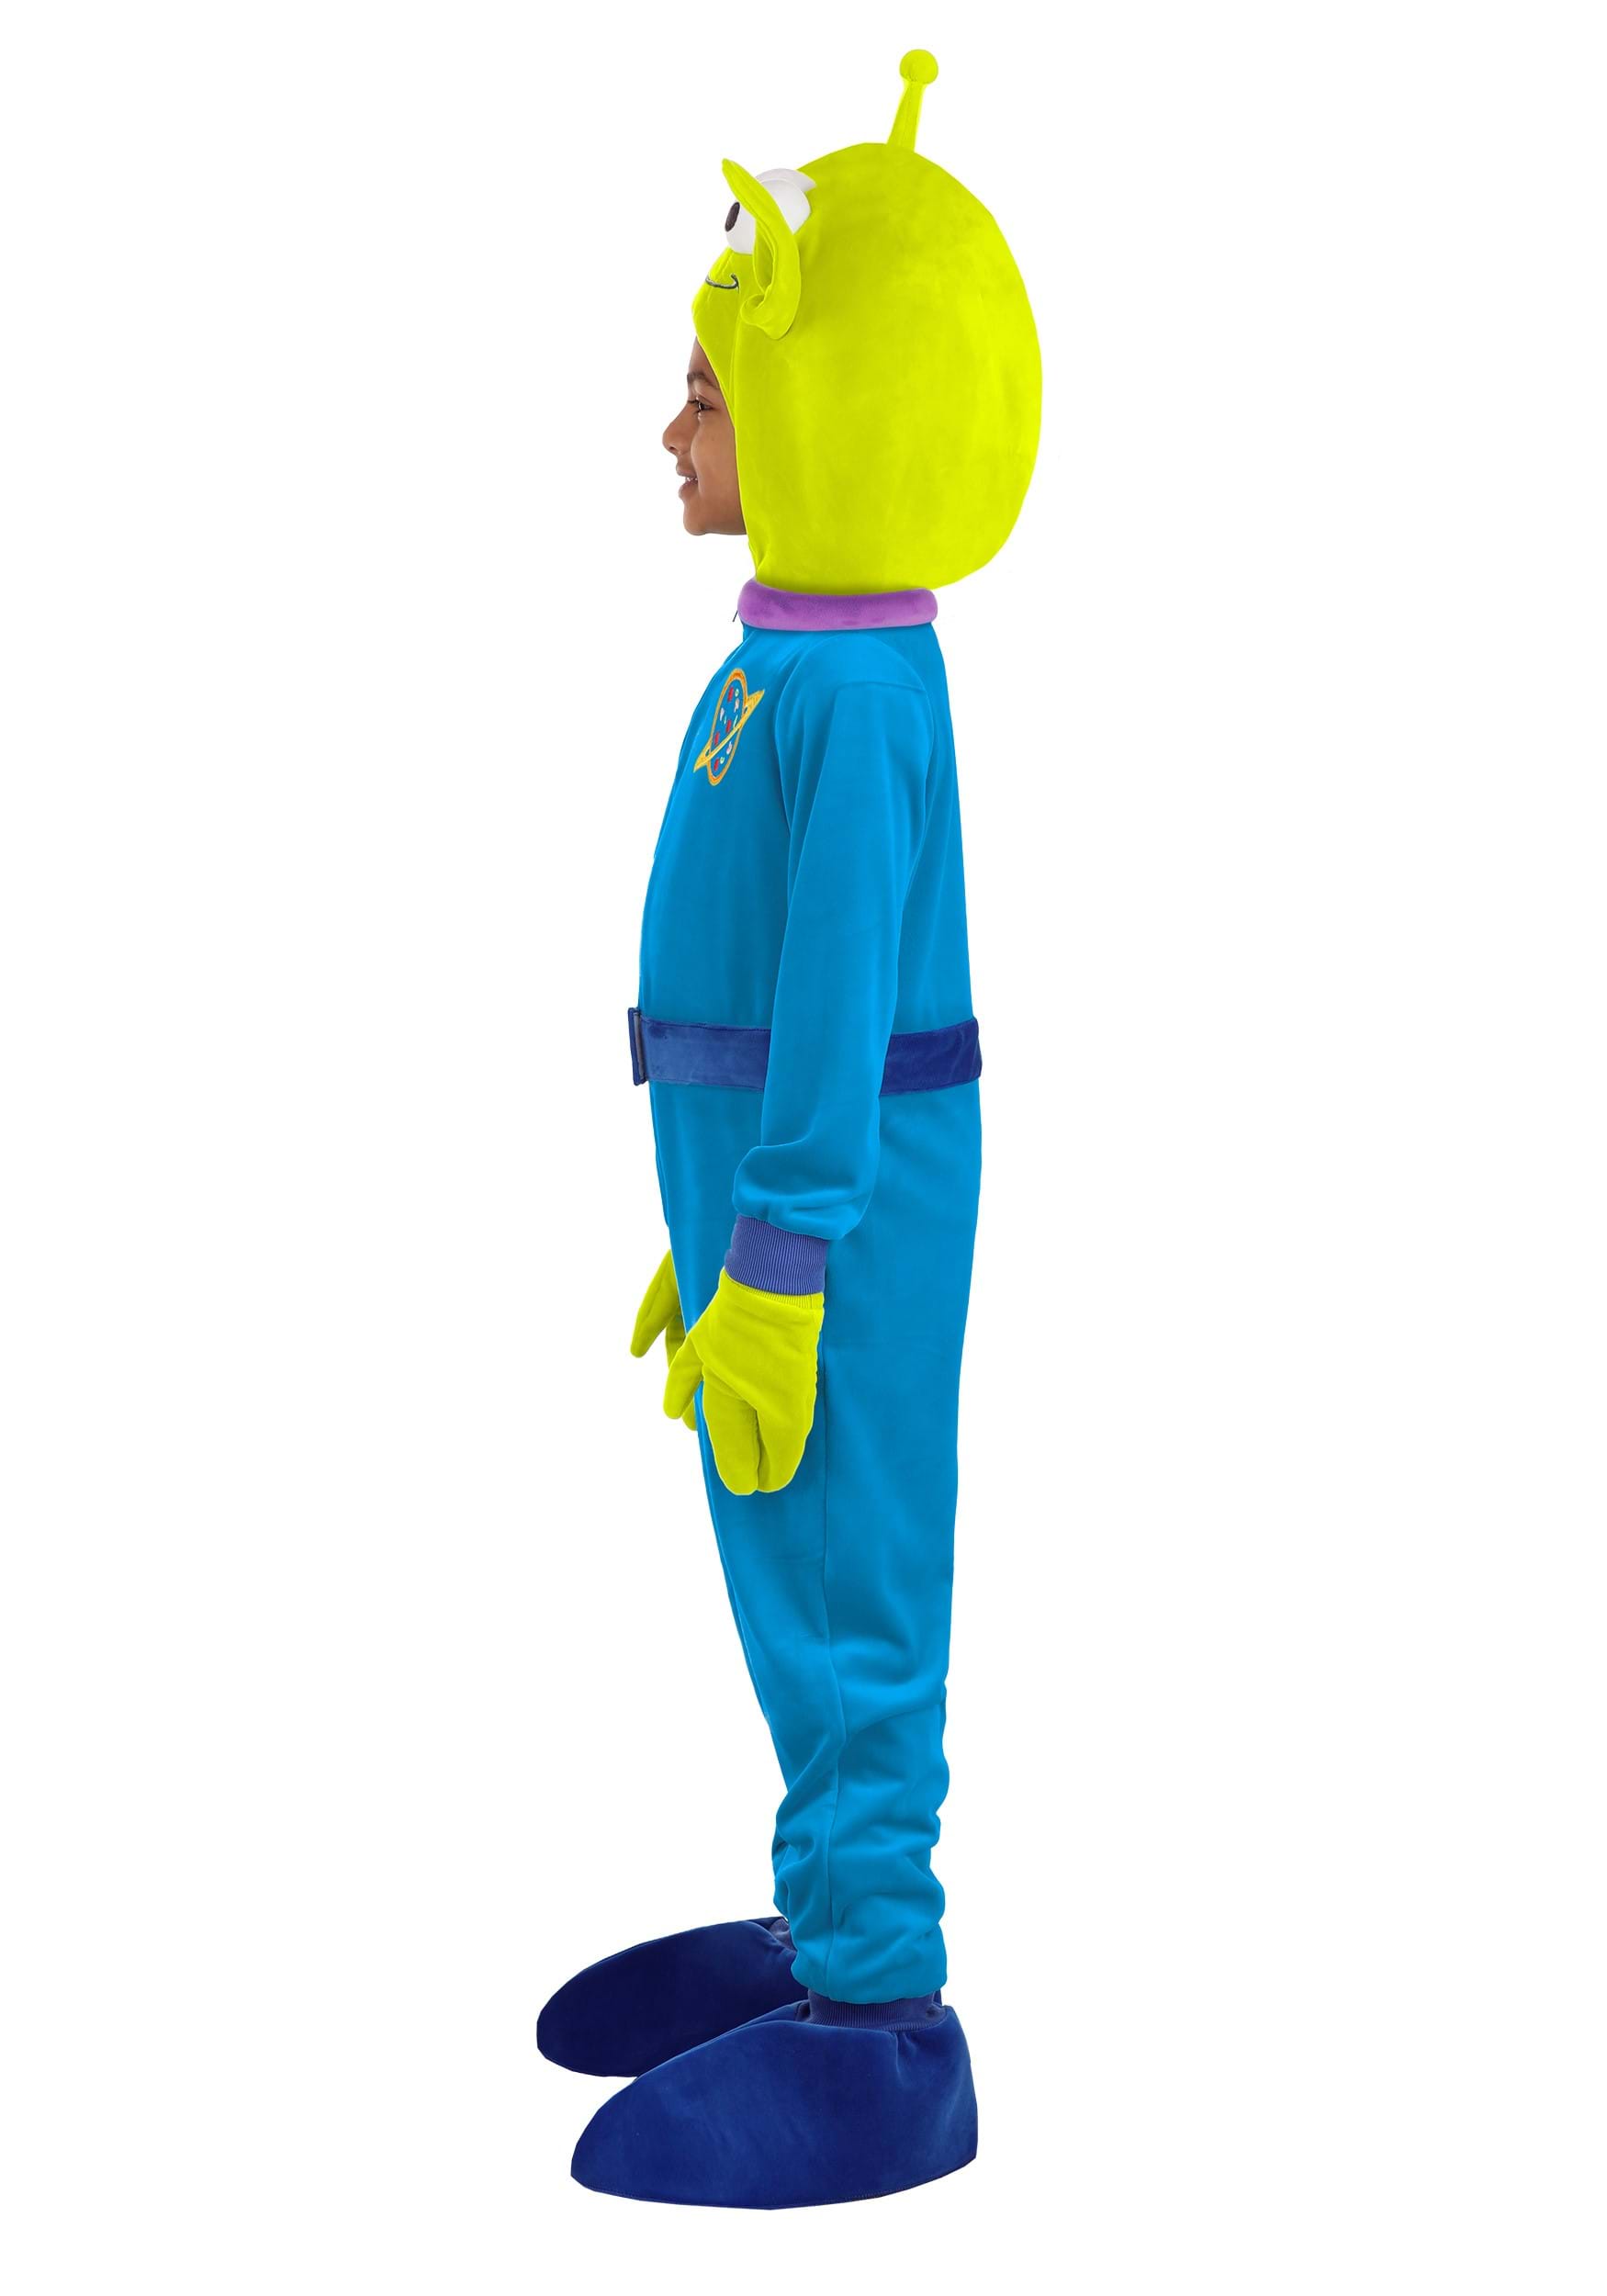 Kid's Disney and Pixar Toy Story Alien Costume